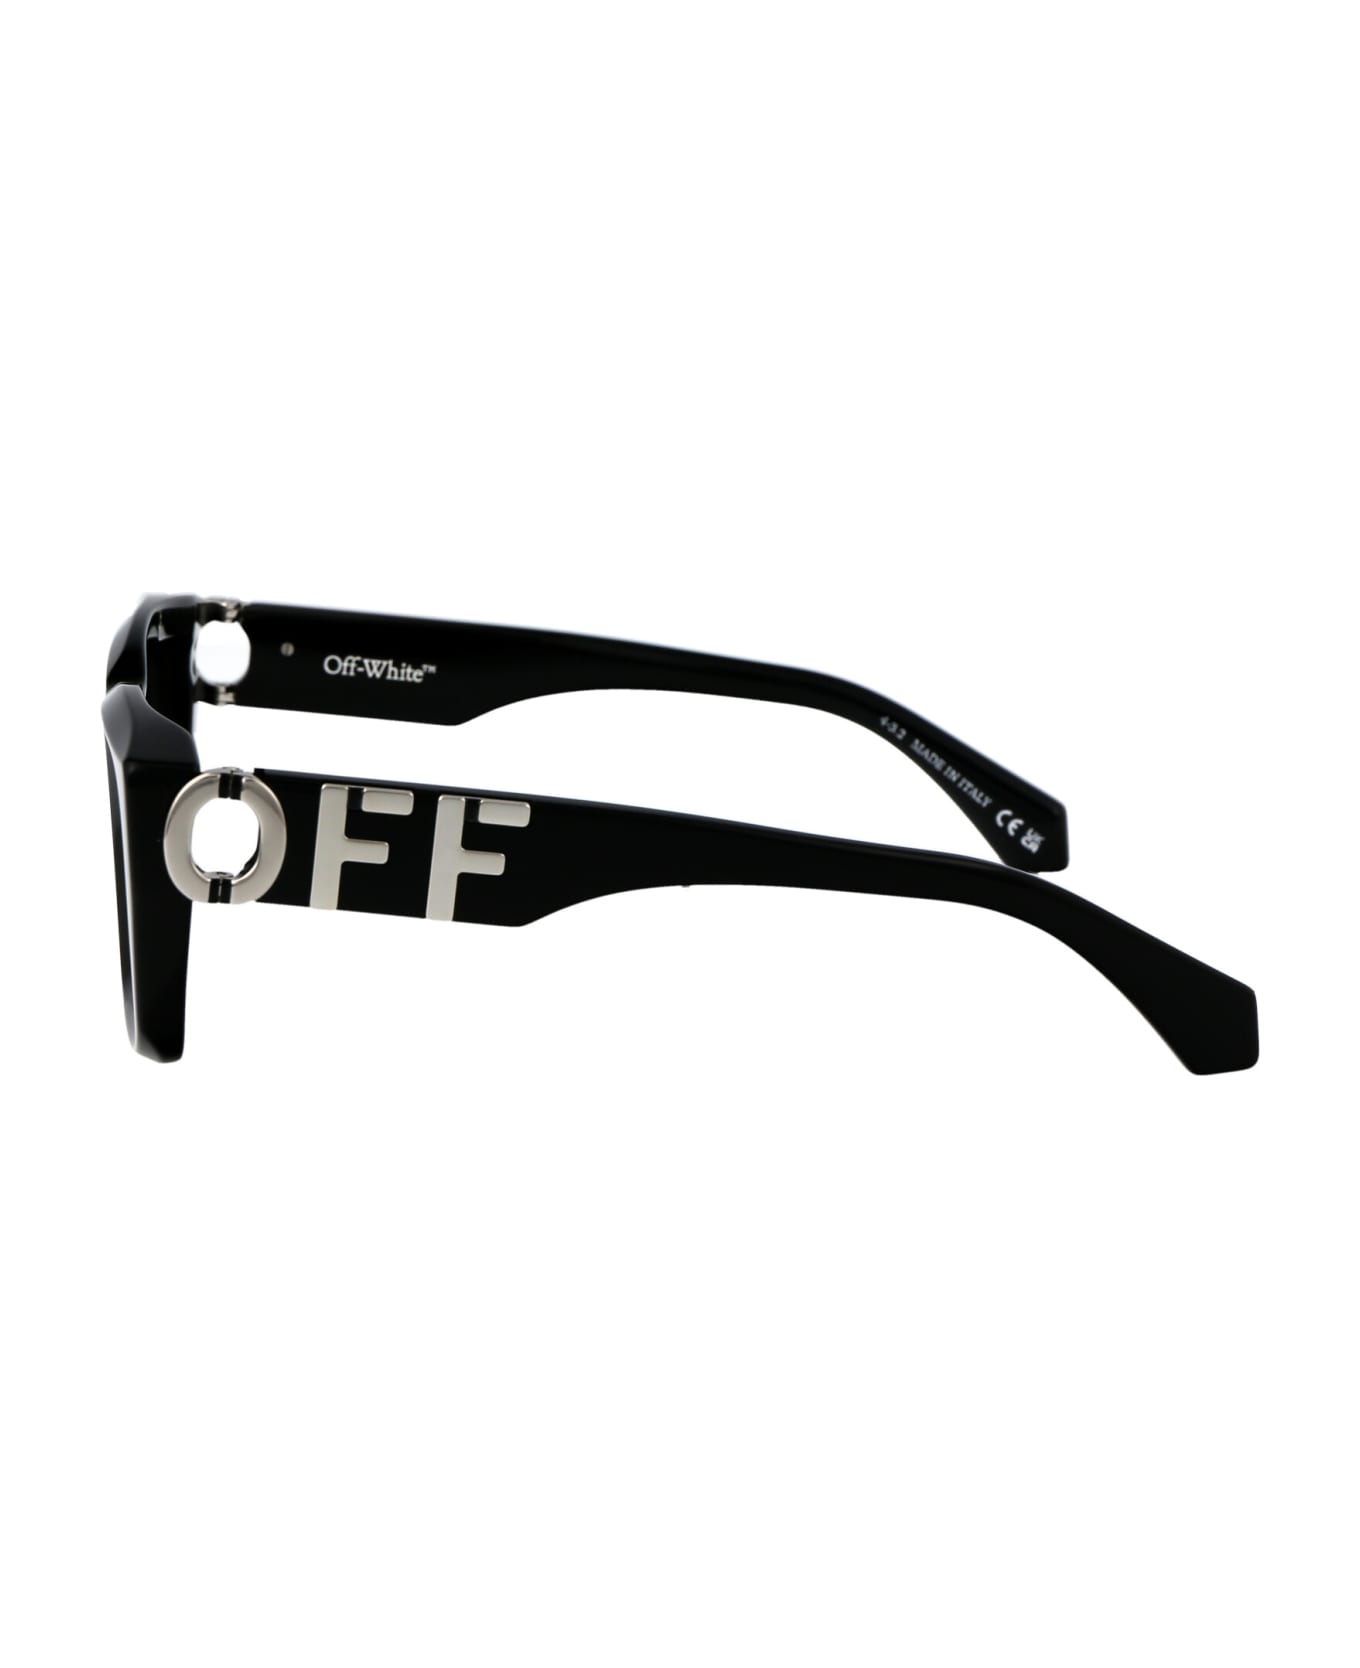 Off-White Hays Sunglasses - 1007 BLACK DARK GREY